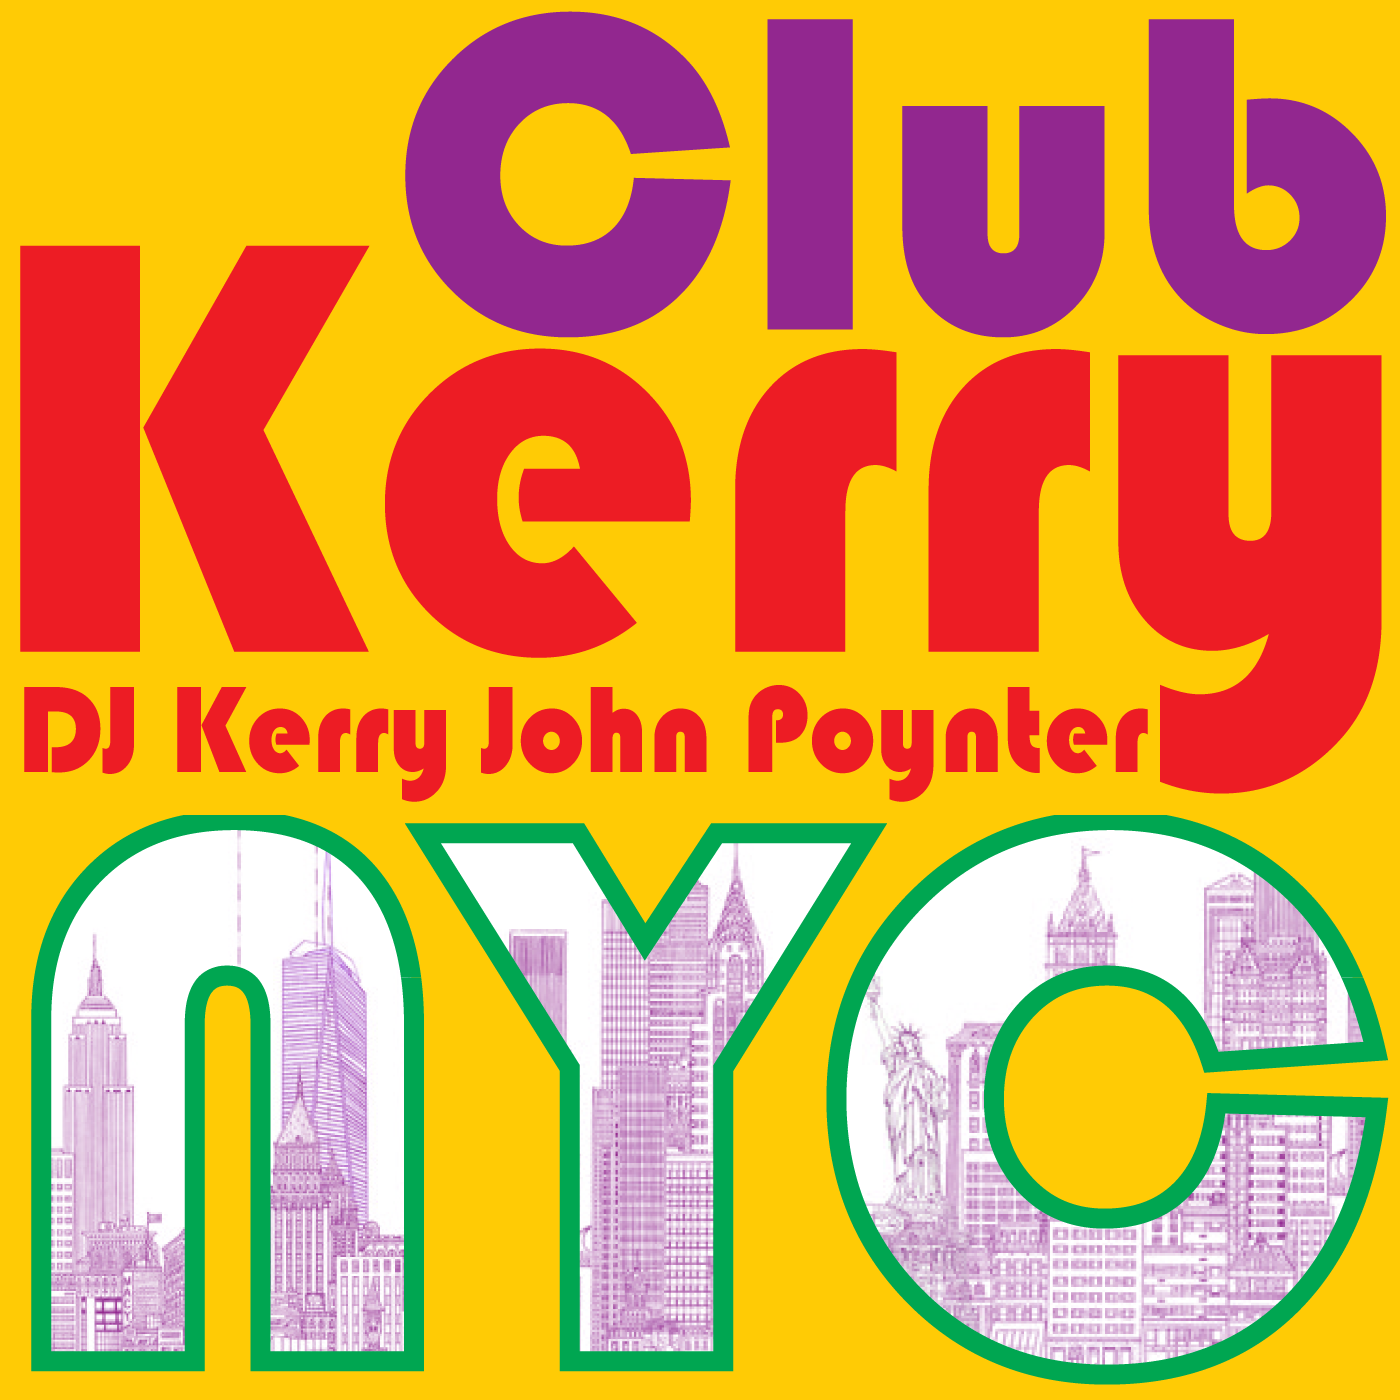 A highlight from Retro Fusion 14 (Vocal House, Dance, Deep House, Melodic House) - DJ Kerry John Poynter